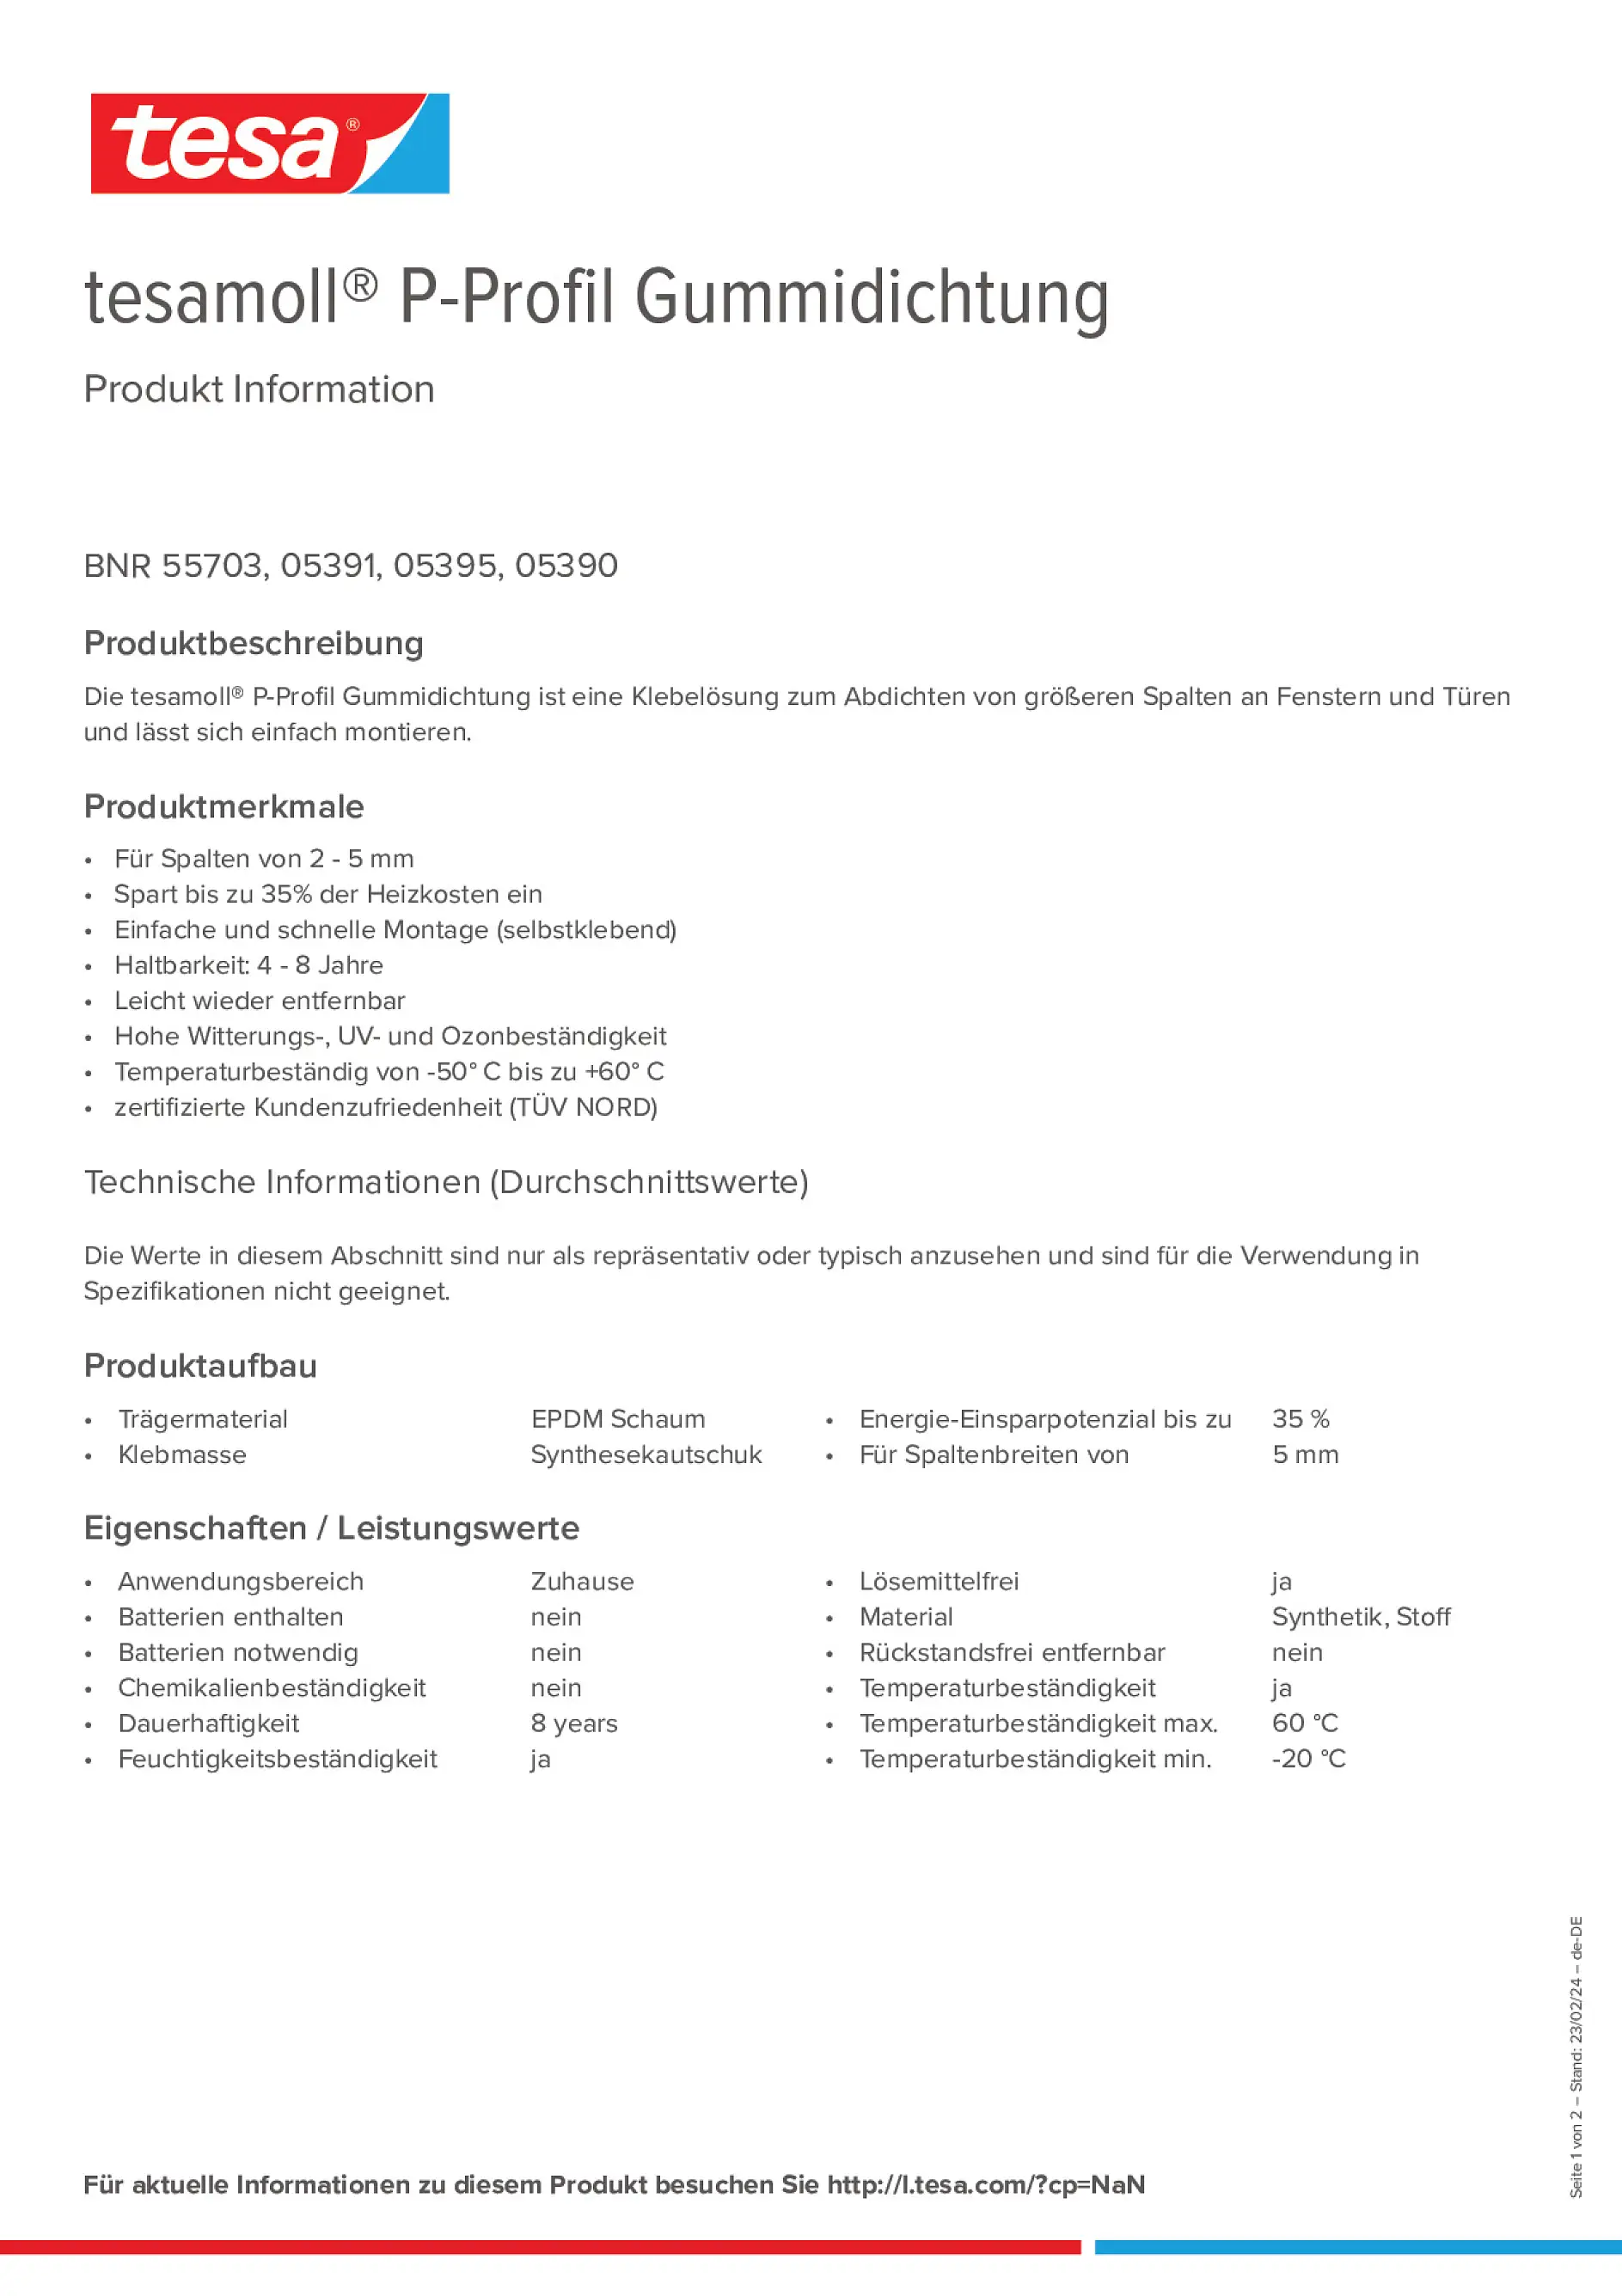 Product information_tesamoll® 5366_de-DE